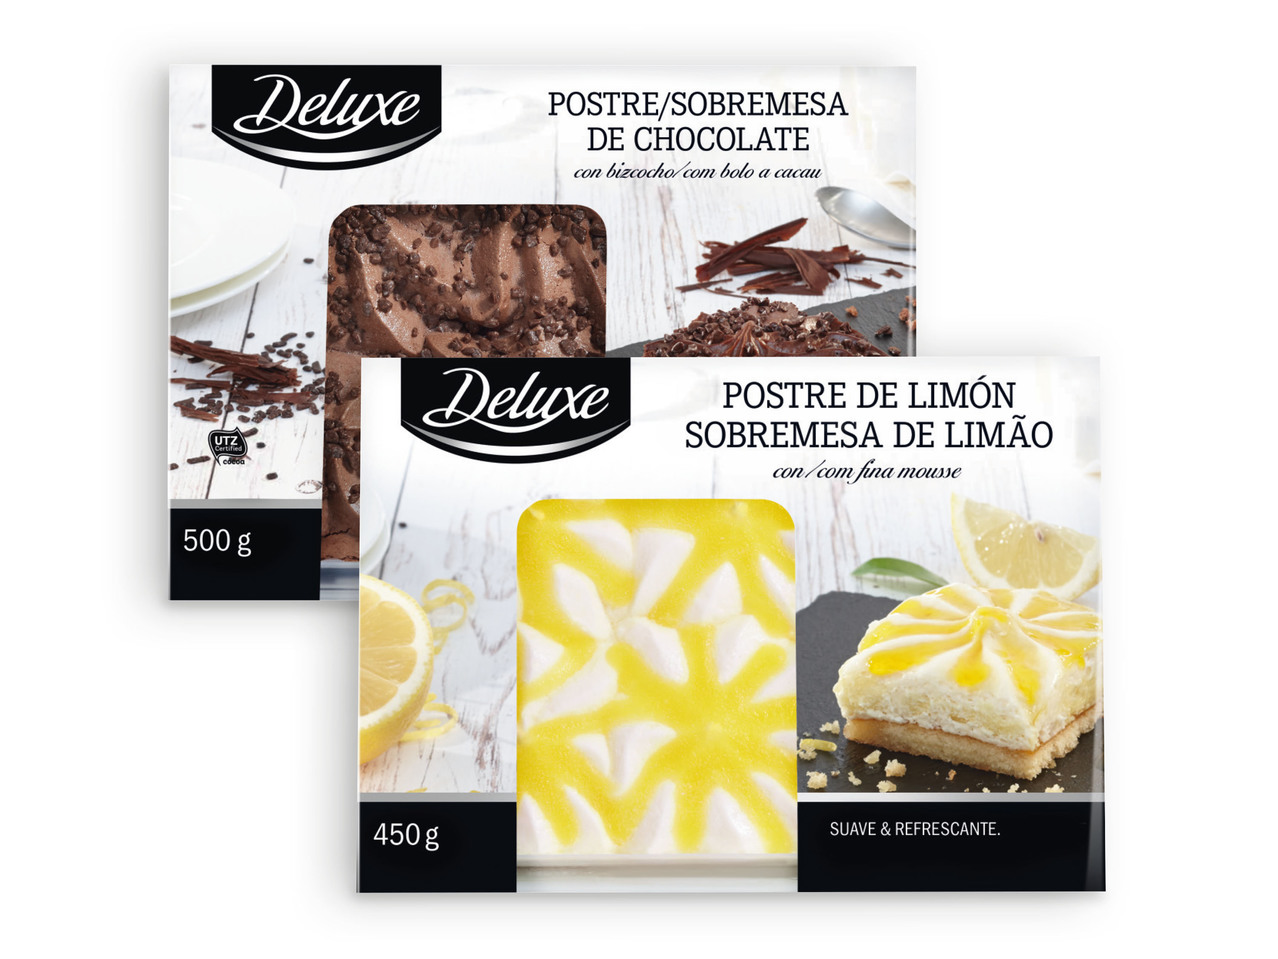 DELUXE(R) Sobremesas de Limão / Chocolate